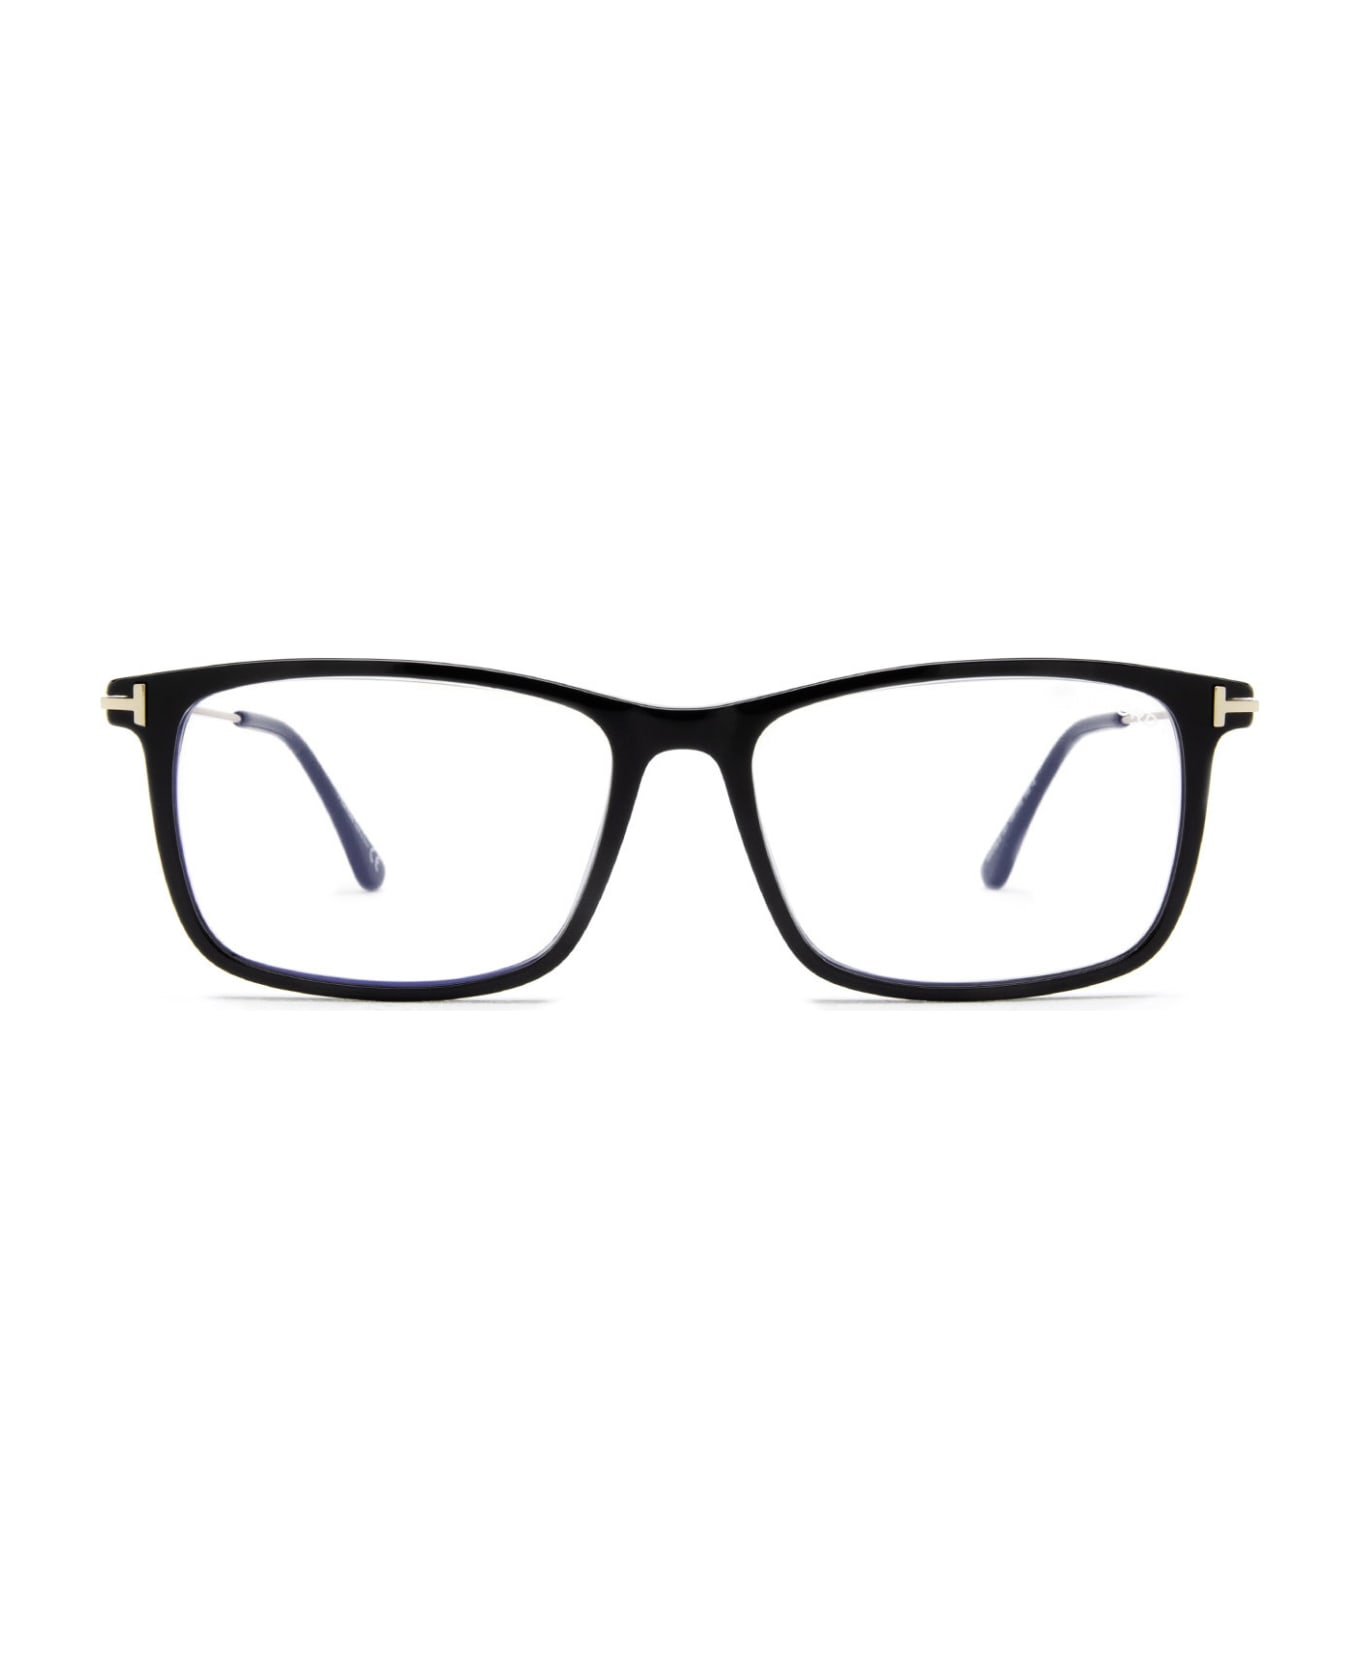 Tom Ford Eyewear Ft5758-b Black Glasses - Black